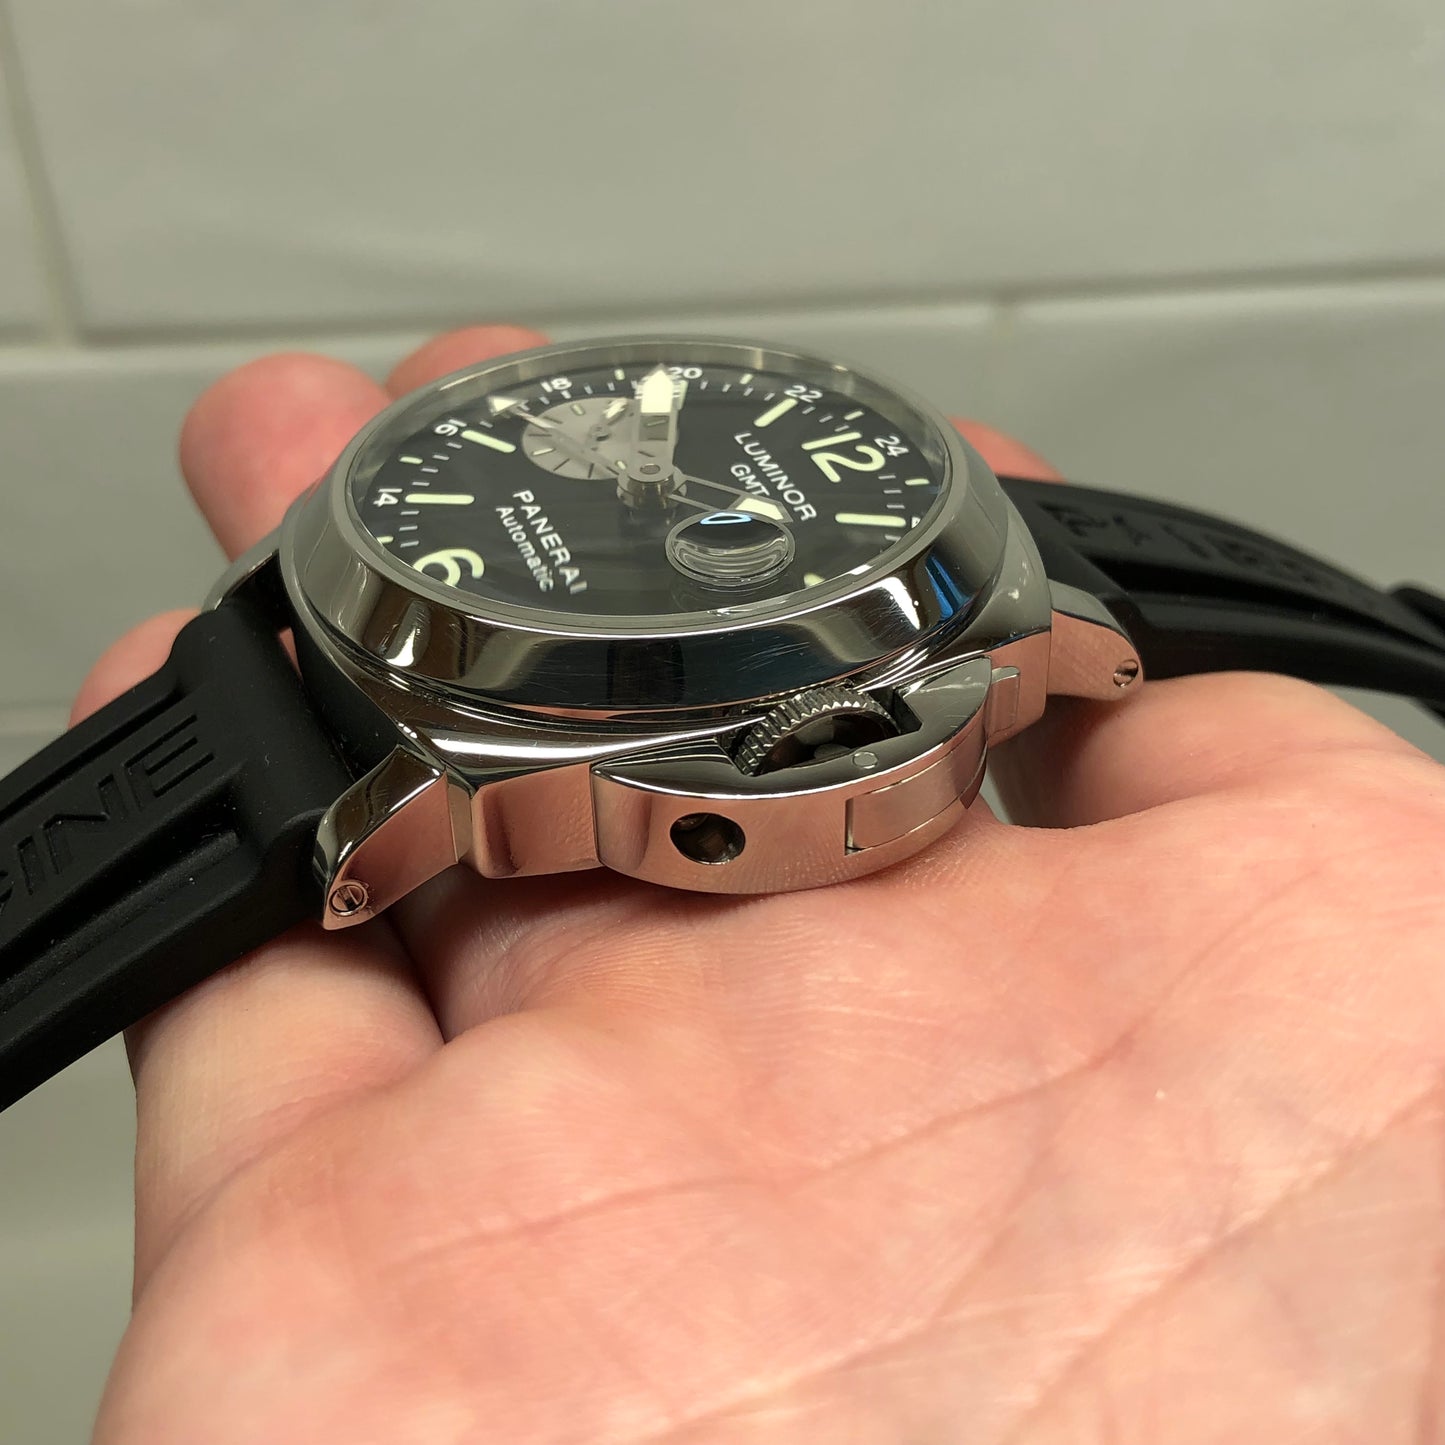 2002 Panerai Luminor GMT PAM 88 Automatic Stainless Steel 44mm Wristwatch - Hashtag Watch Company